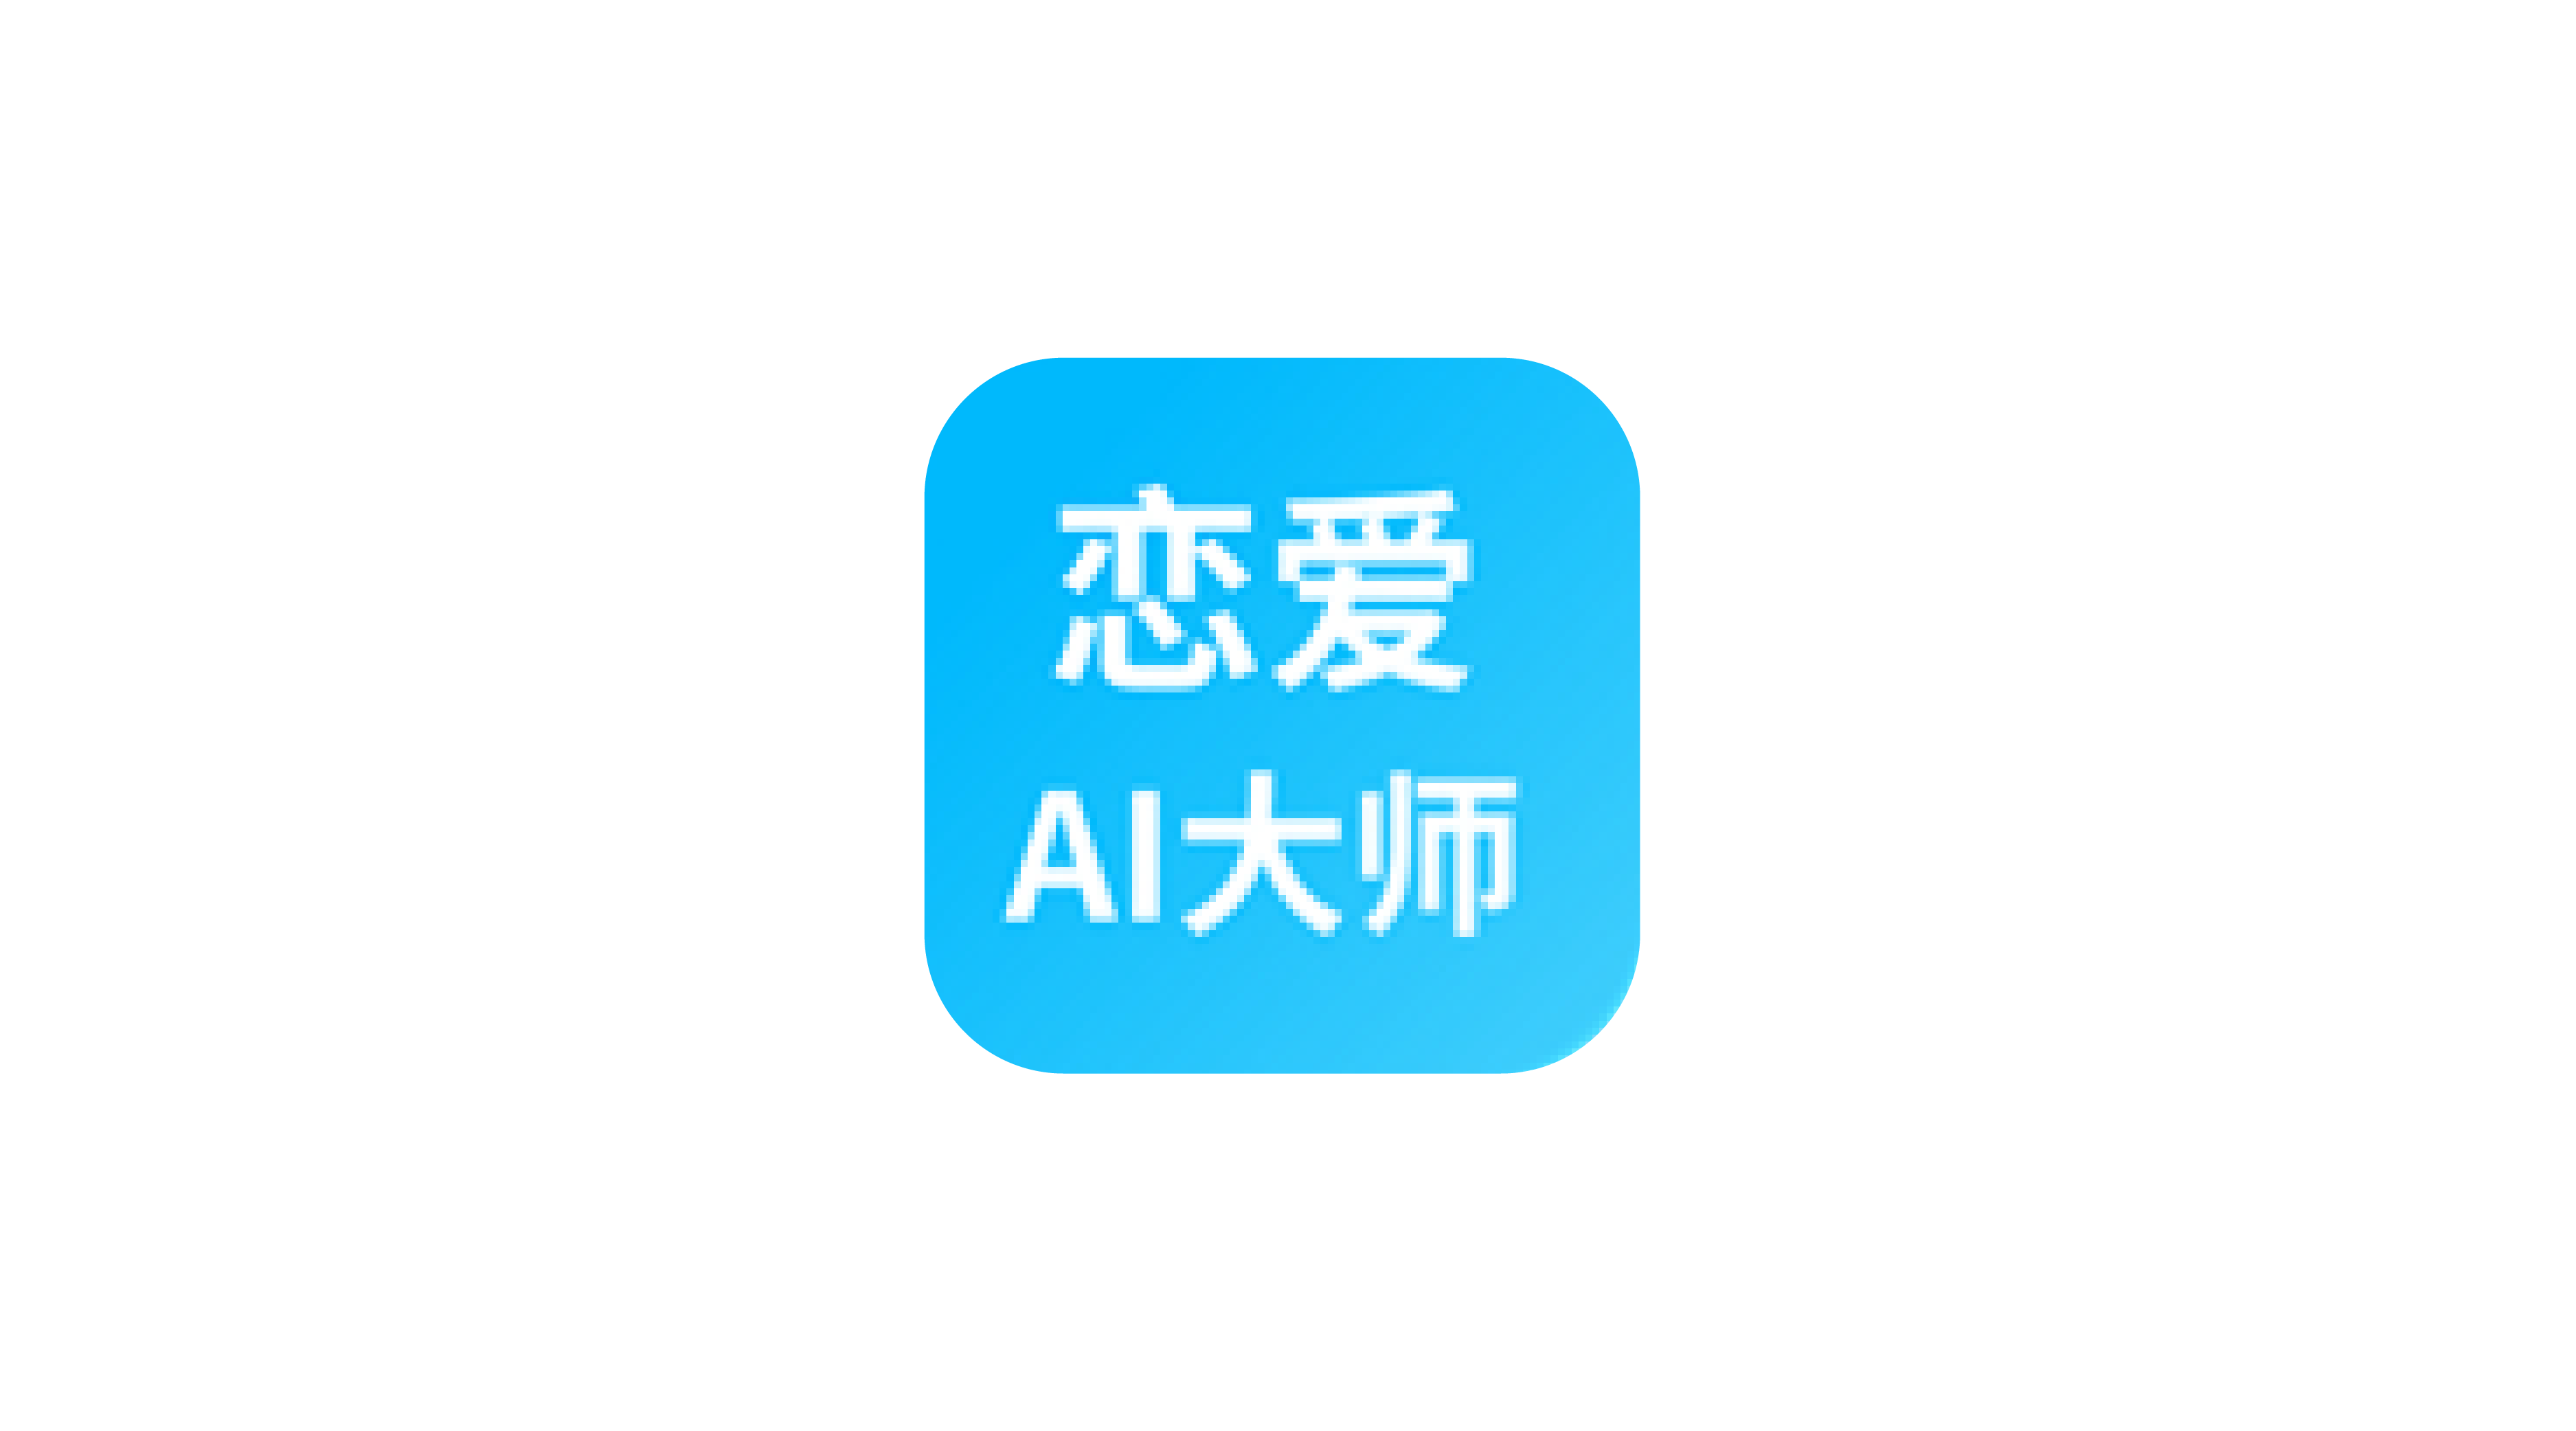 Android 恋爱AI大师 绿化版 让你舔狗变海王 海量话术 脱单神器v1.3.1-zeli软件岛